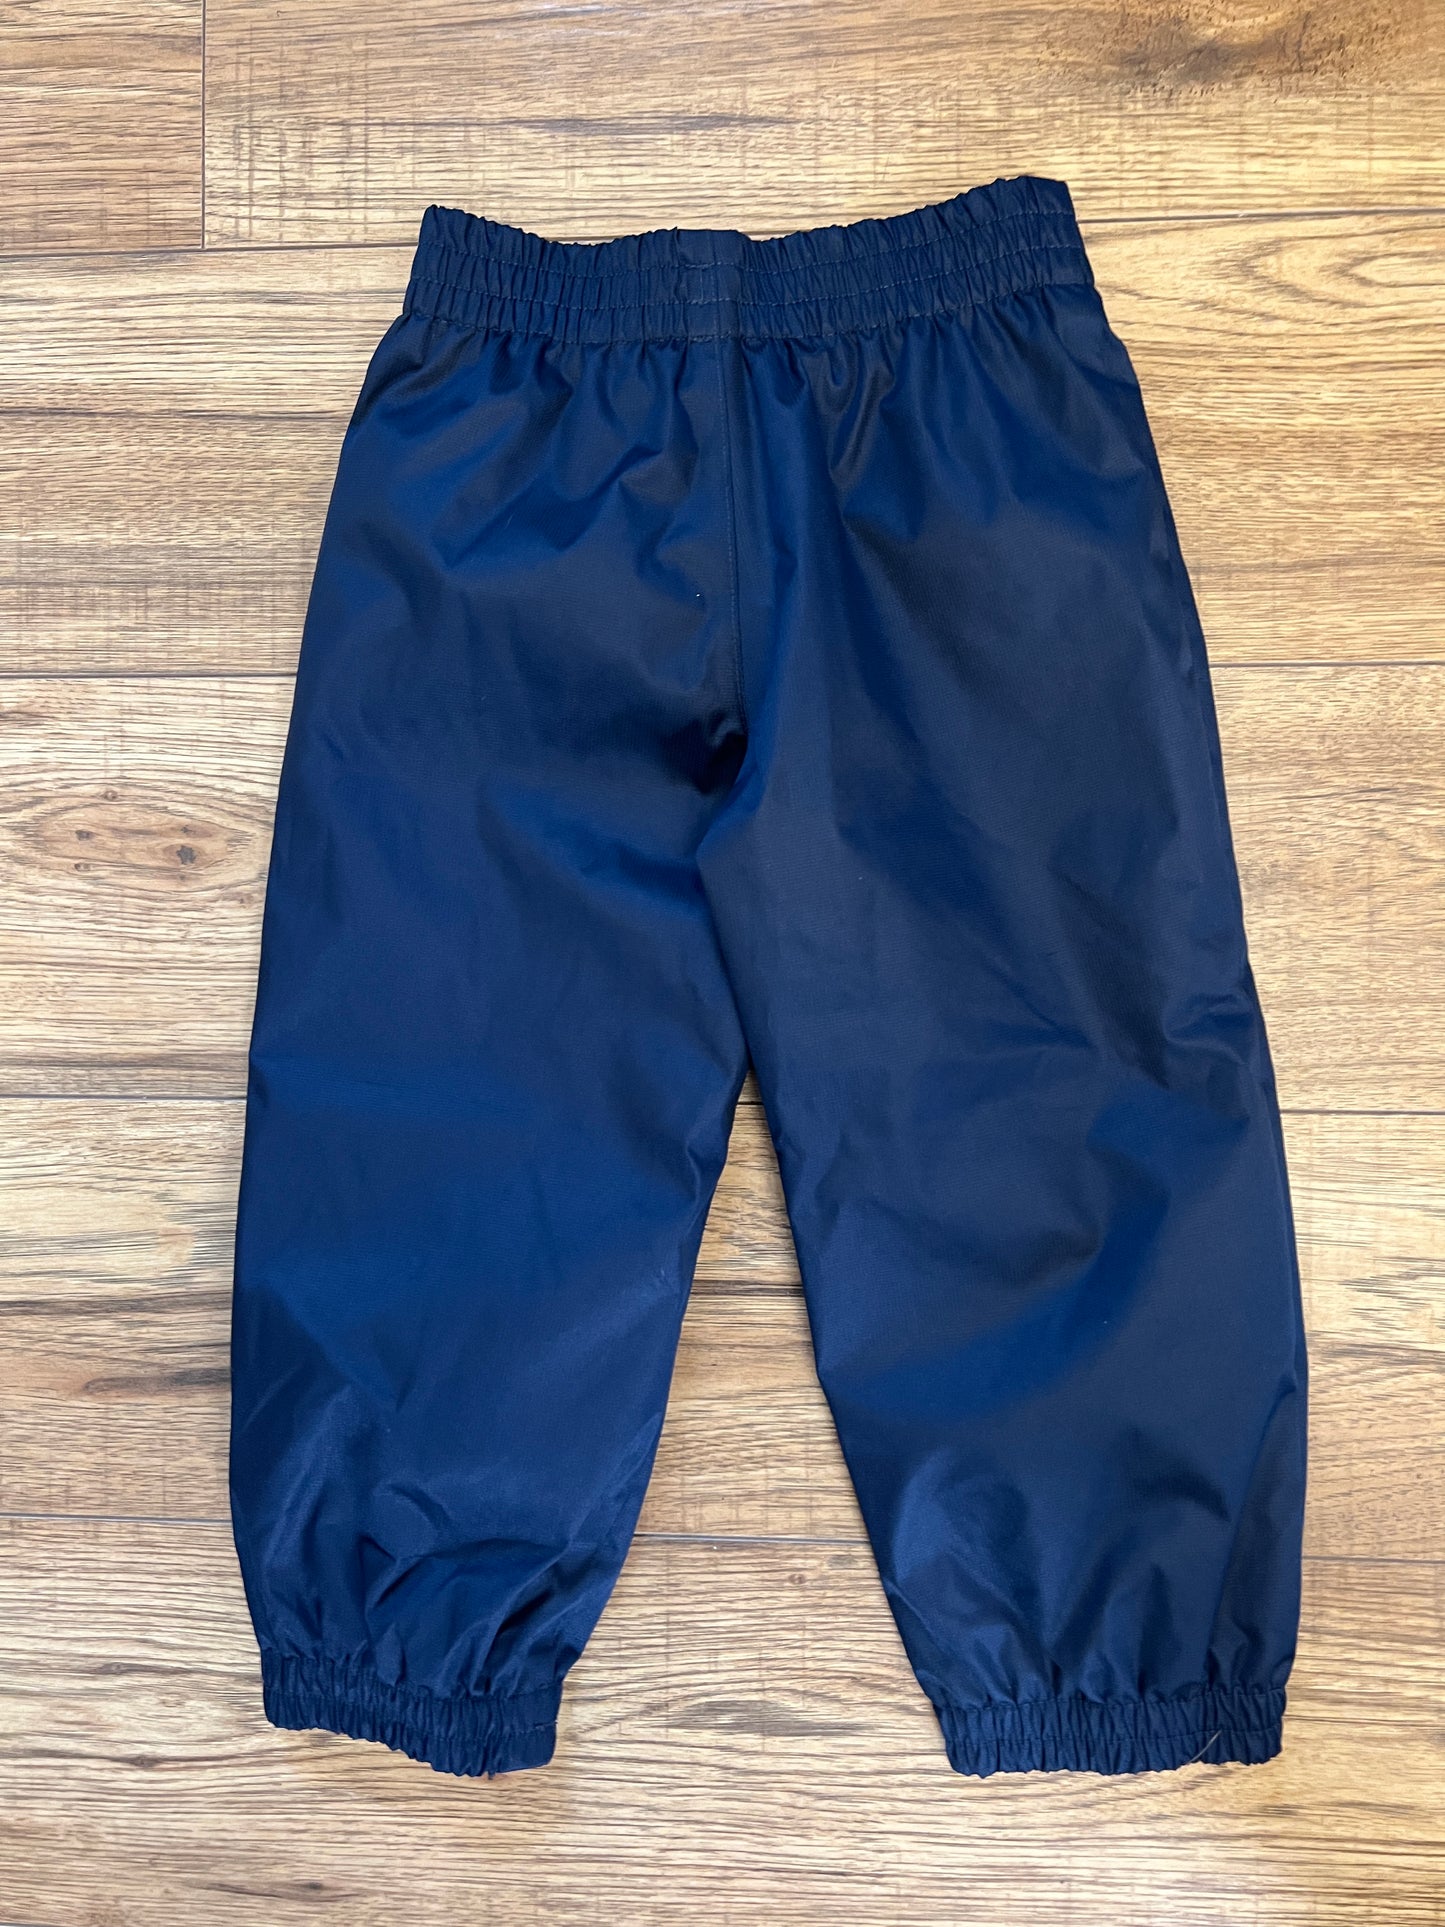 Rain Pants Child Size 3 Gusti Marine Blue Like New